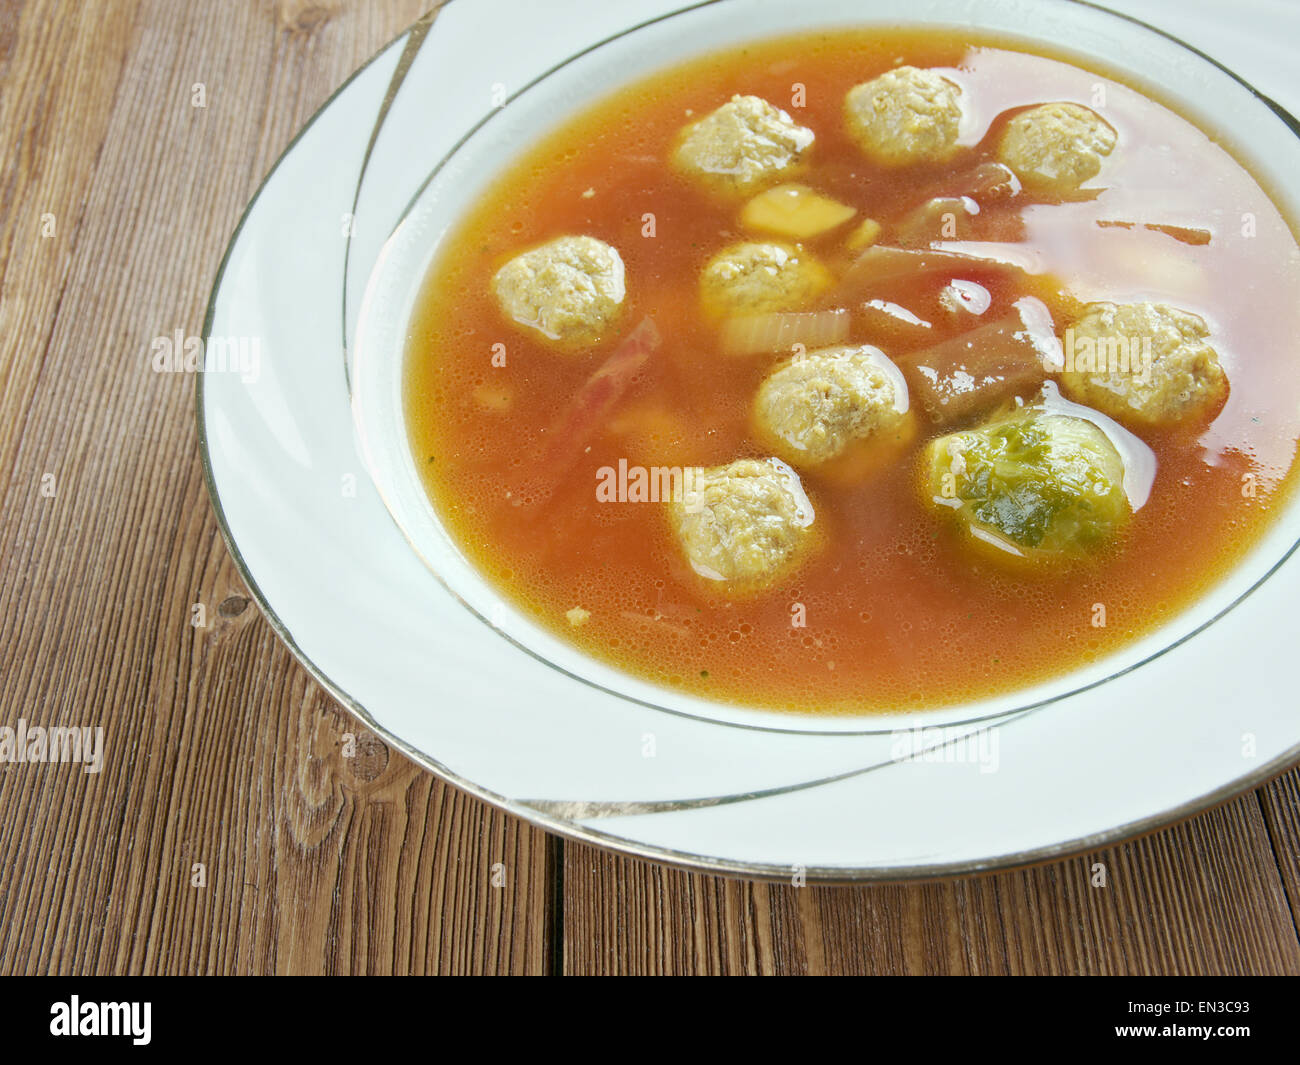 Swabian soup with meatballs.German cuisine Stock Photo